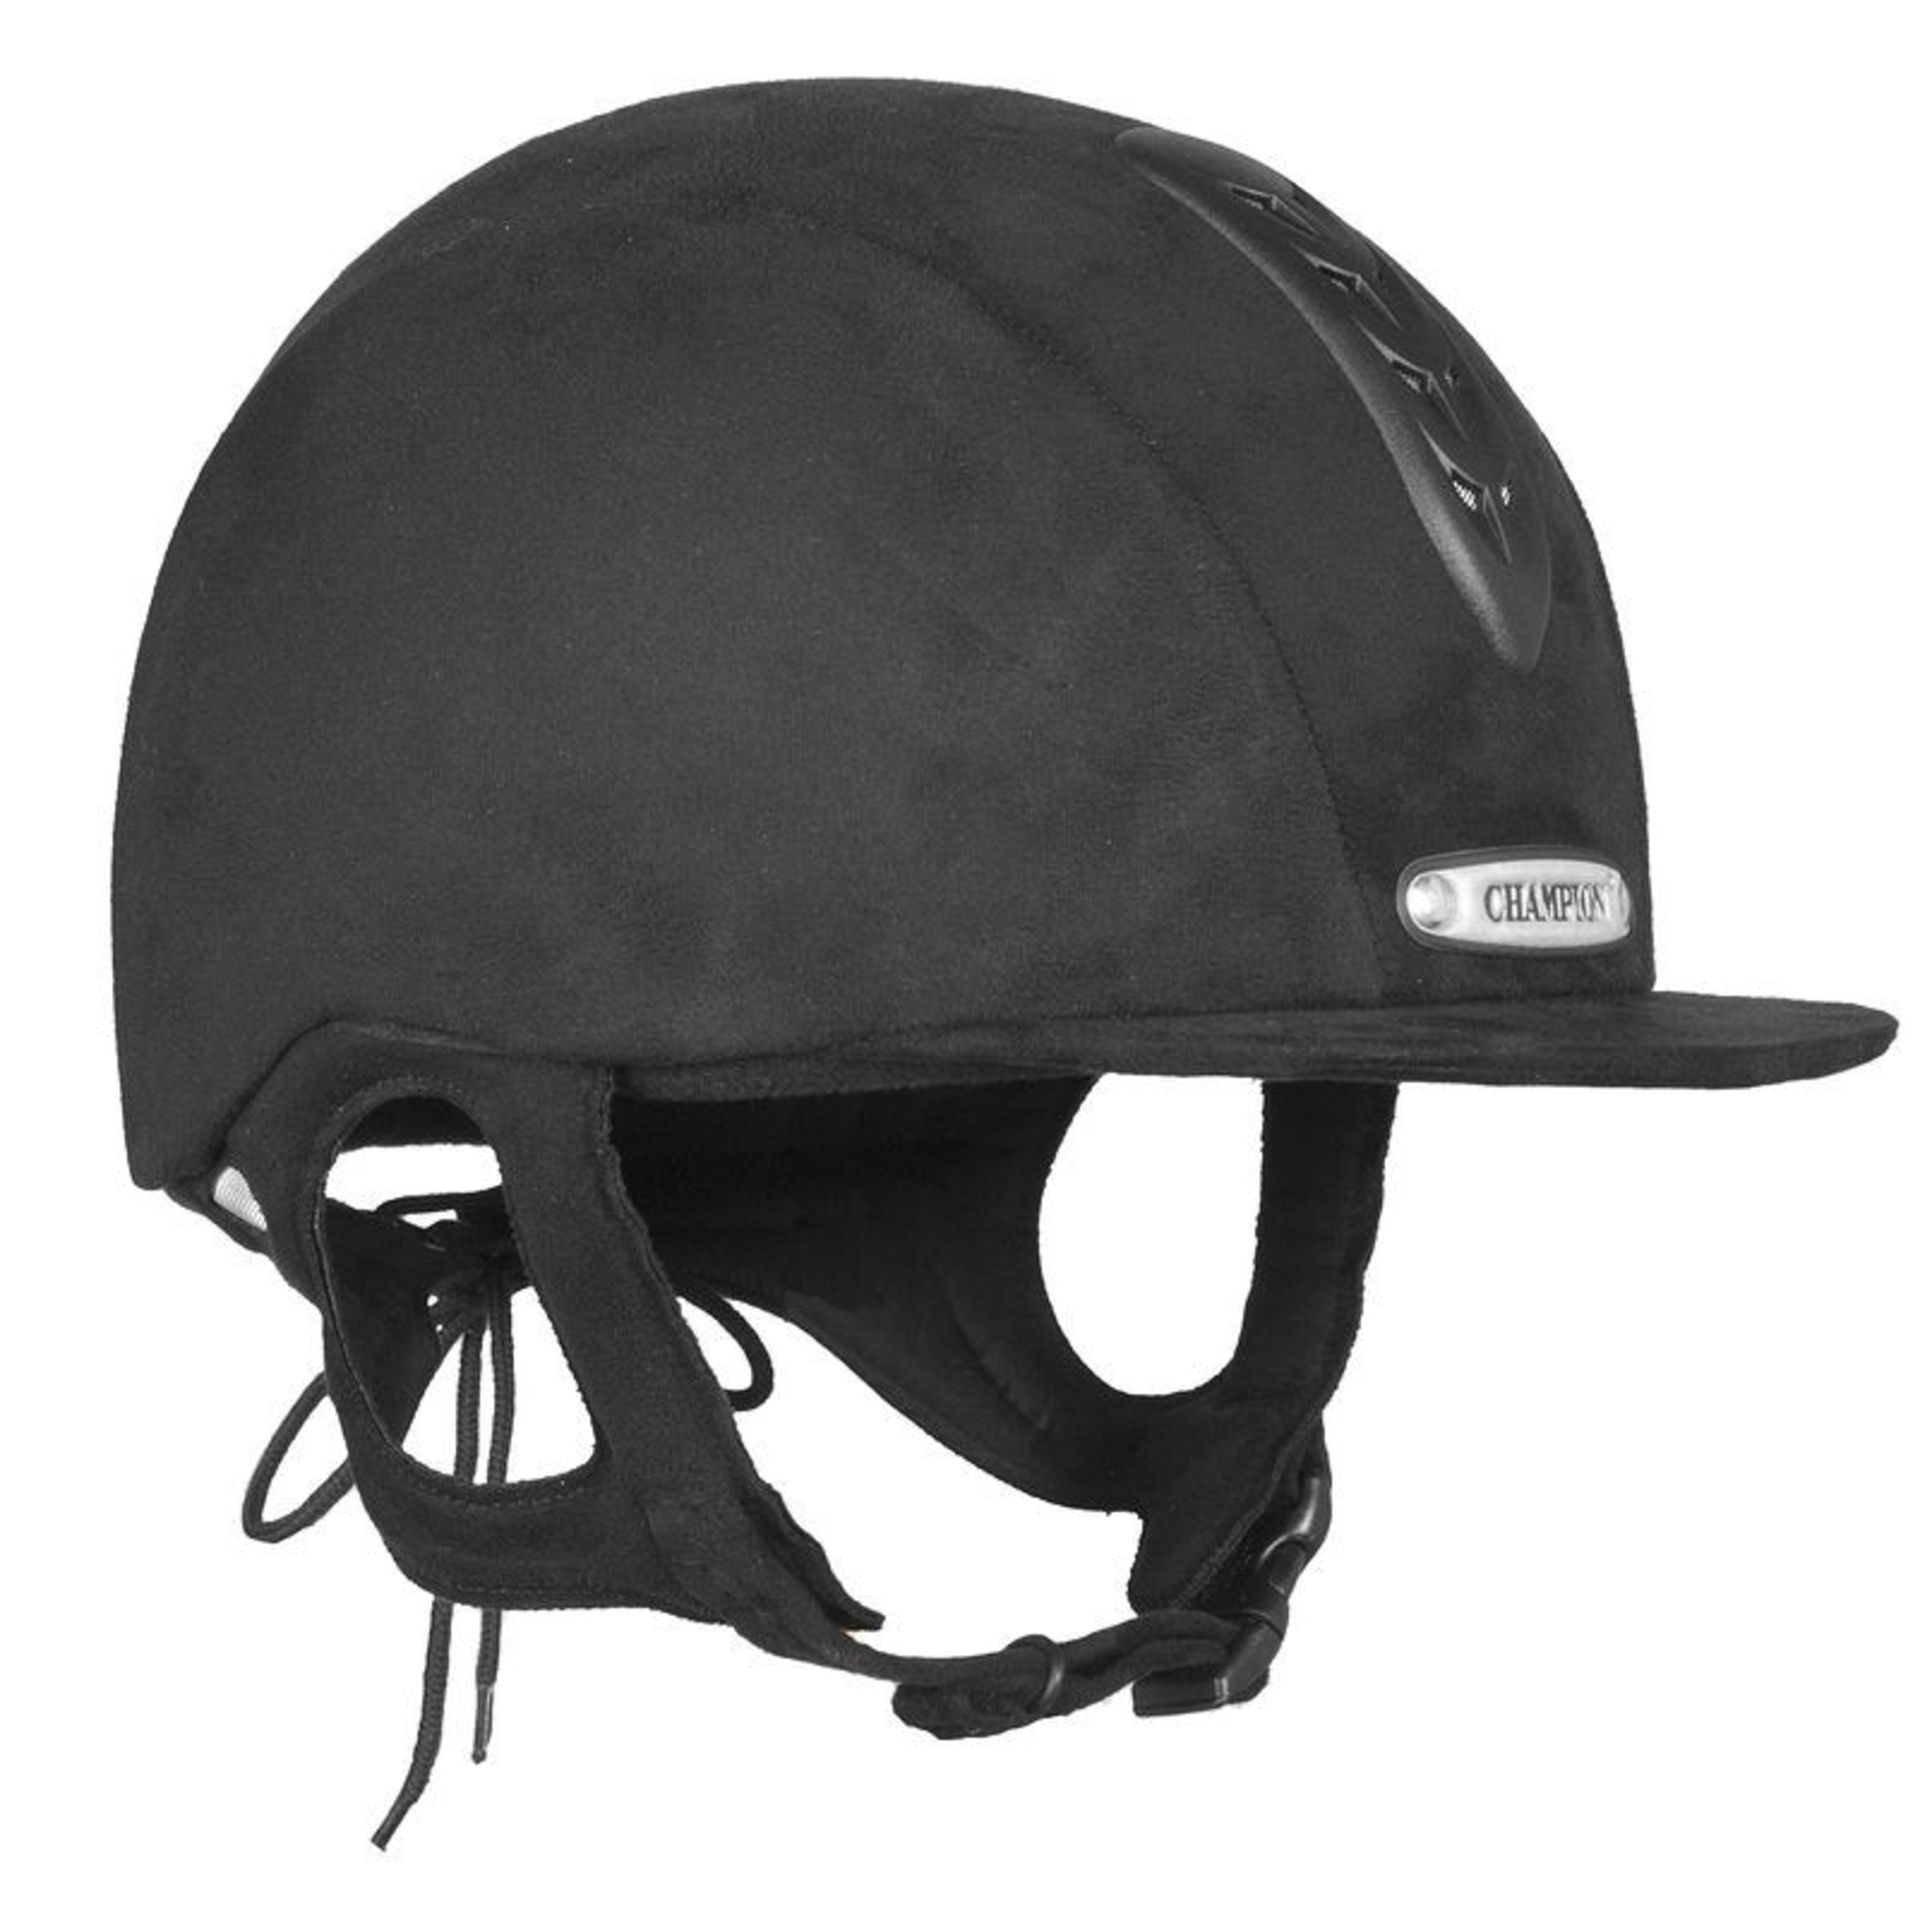 1 x Champion X-Air Junior Horse Riding Helmet in Black - Size 53cm - Ref J971 - CL401 - Ref J971 -